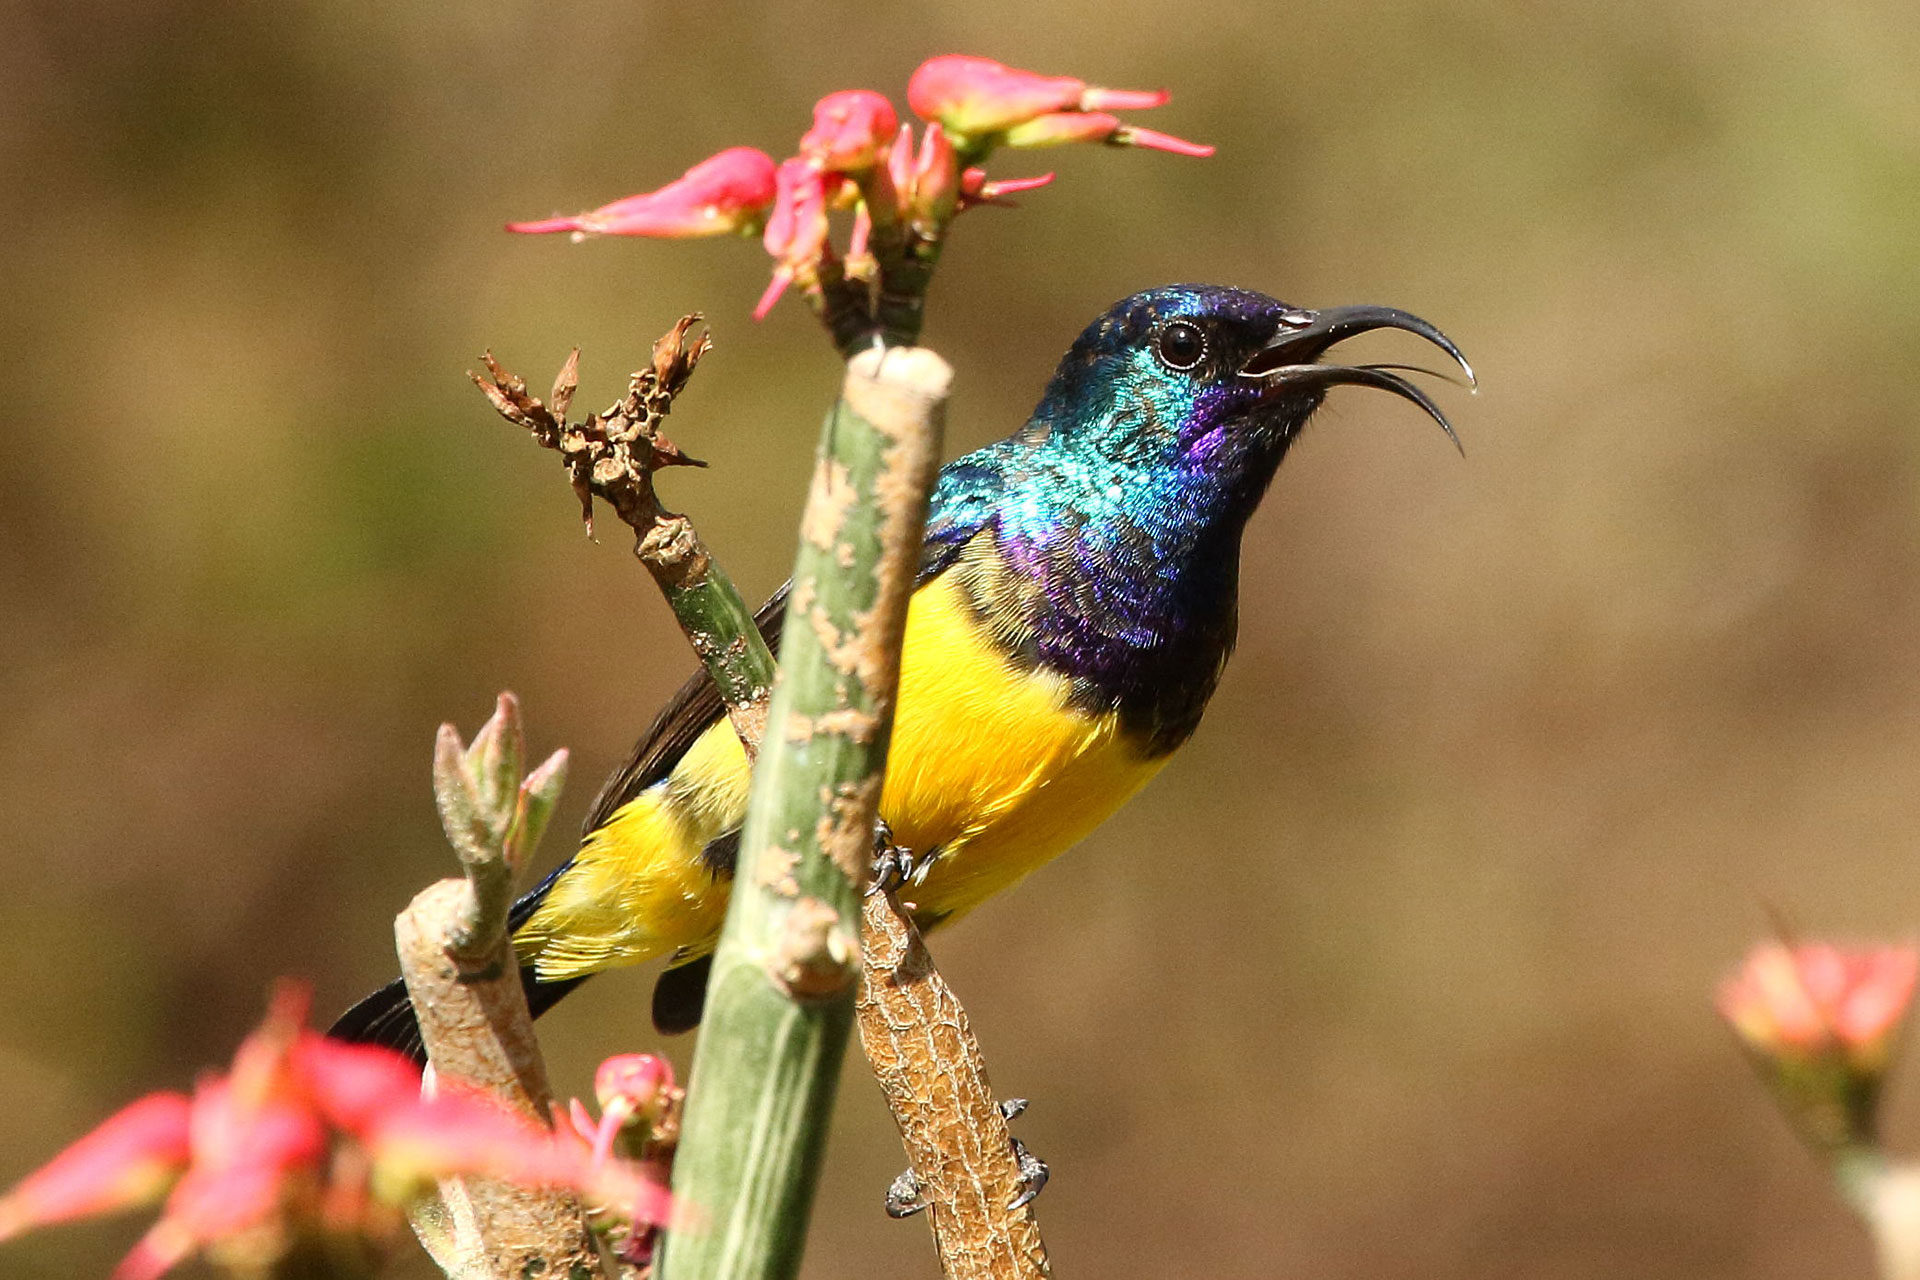 Variable sunbird, Tanzania